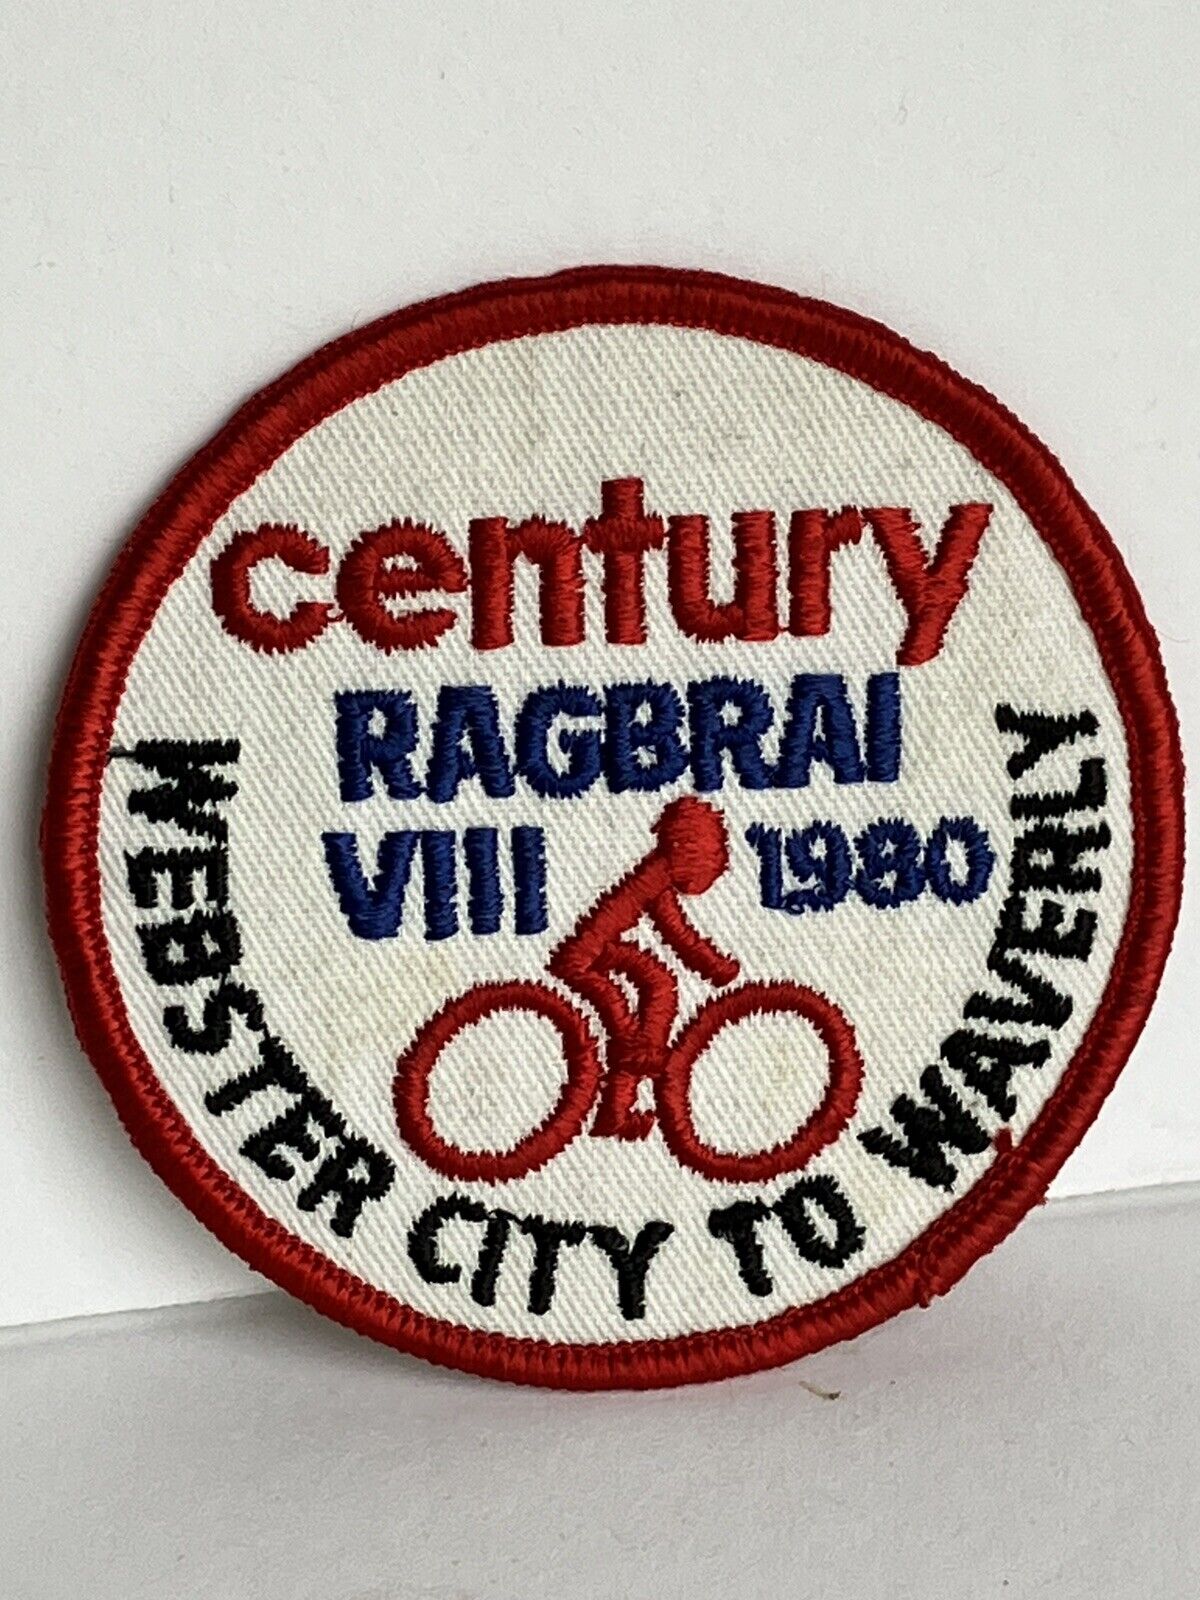 1980 Ragbrai Viii Century Loop Bike Patch Des Moines Register Cycling Ride